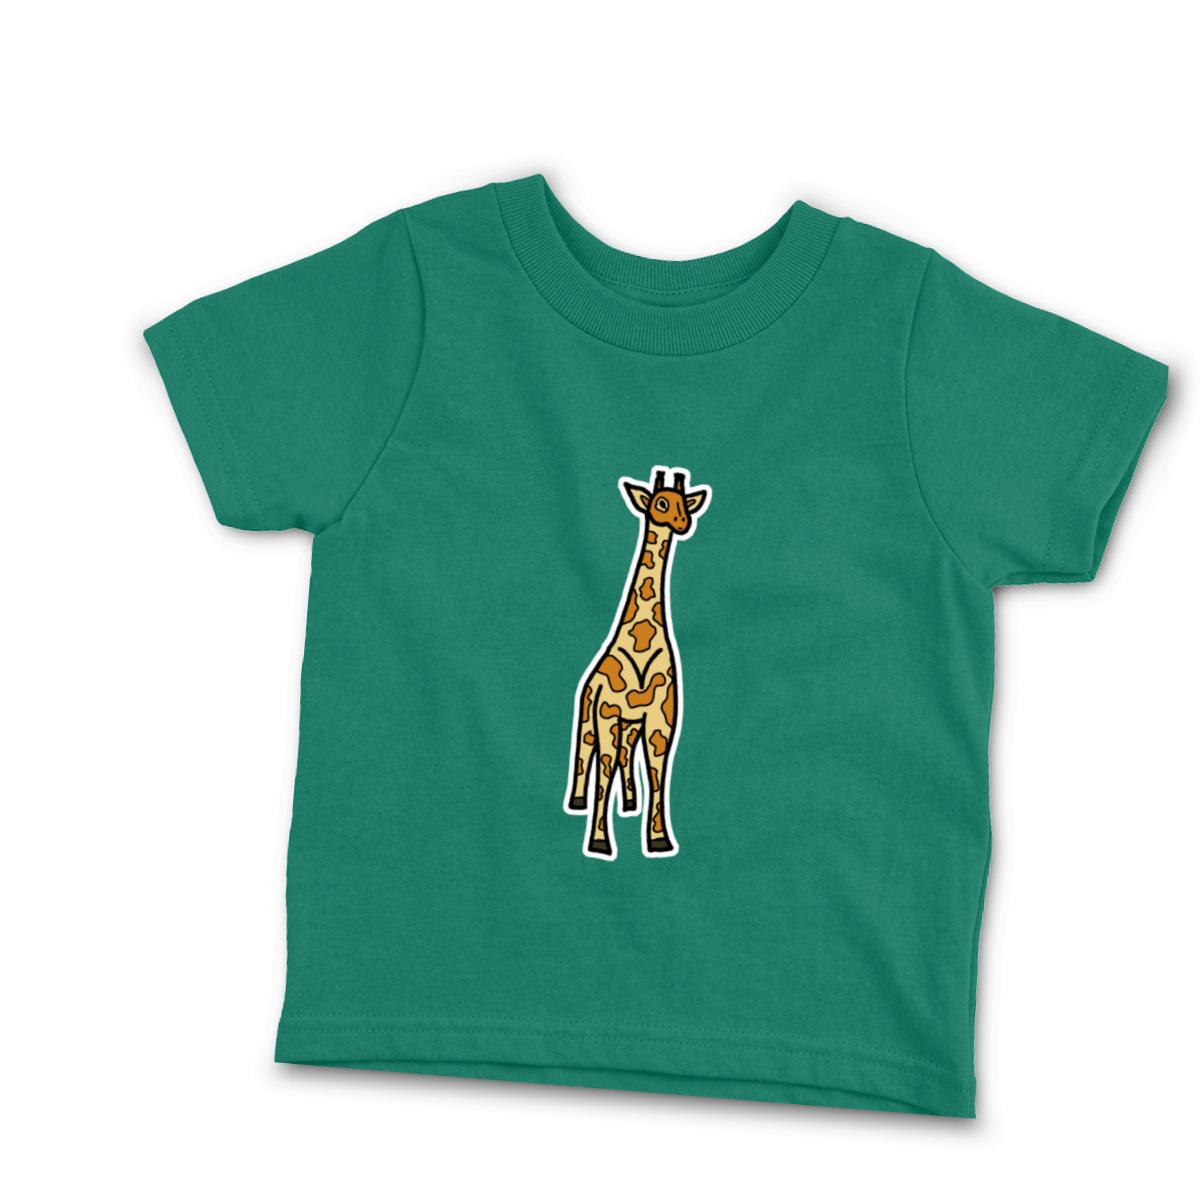 Toy Giraffe Toddler Tee 4T kelly